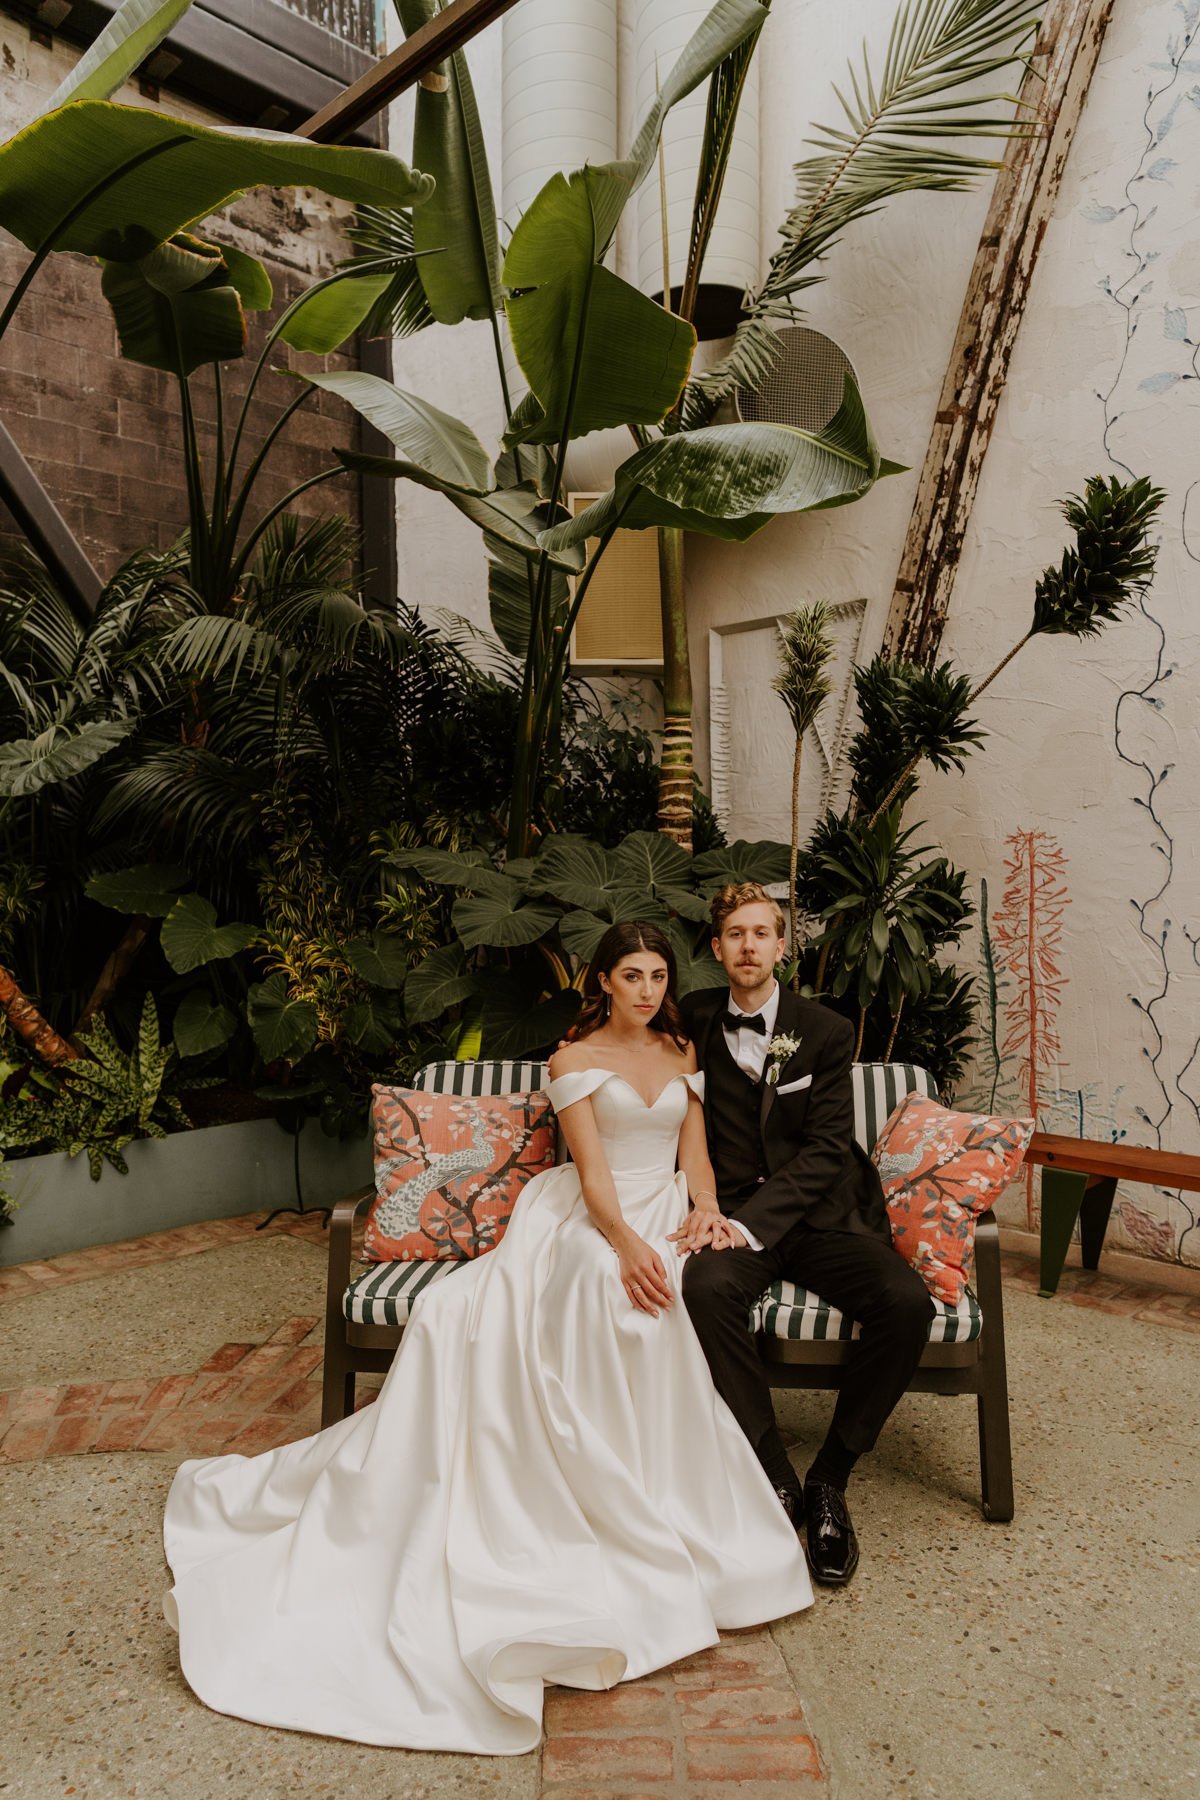 Grass Room DTLA Wedding, bride and groom portrait, photo by tida svy, los angeles wedding photographer